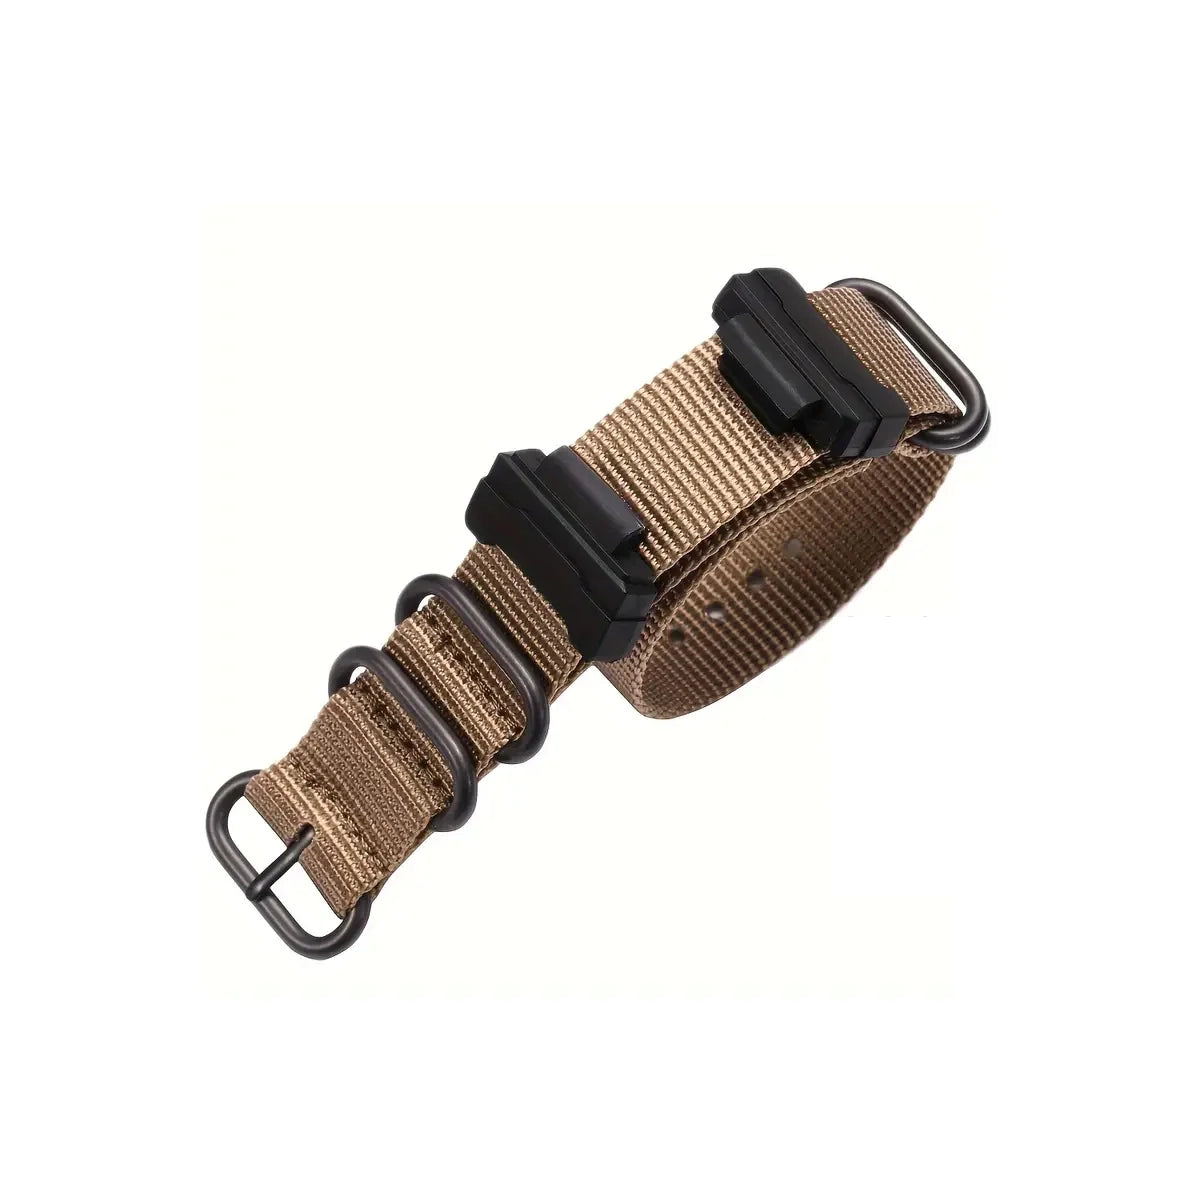 Military Nylon Strap For G-Shock - Sand Brown